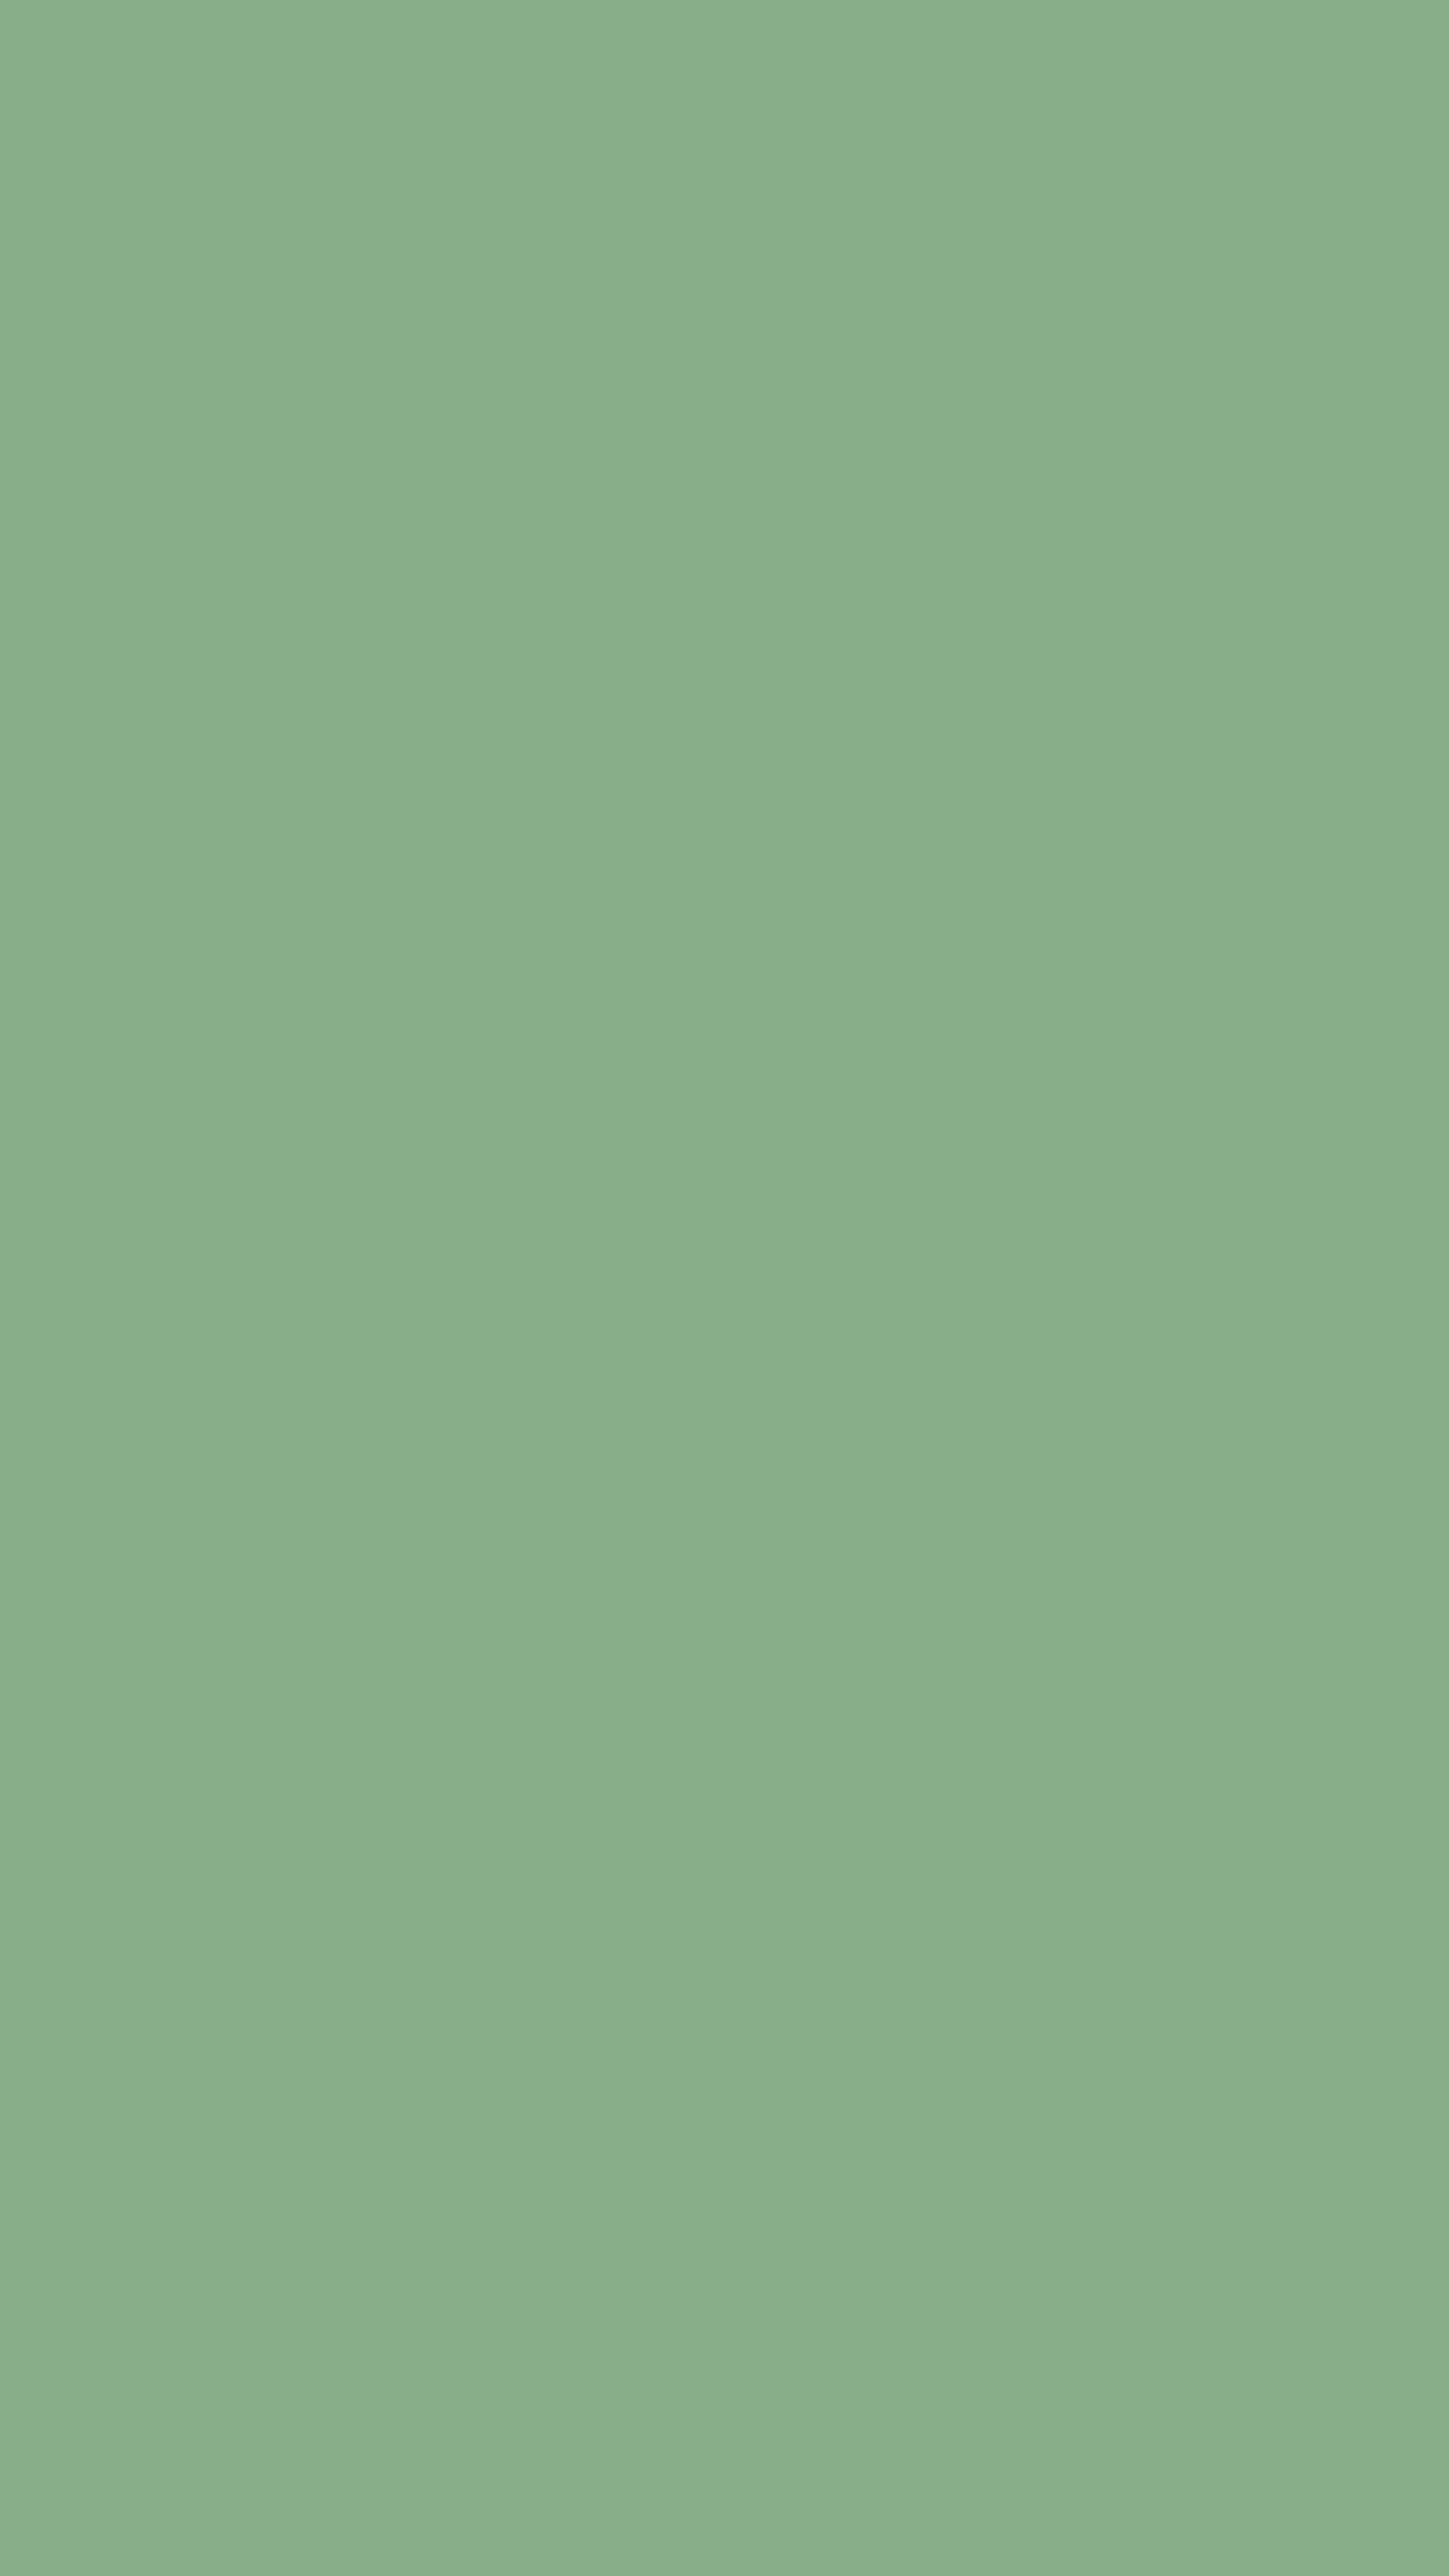 Mint Green Simple Design Background壁紙[26a2bc9029ec4c7c851f]